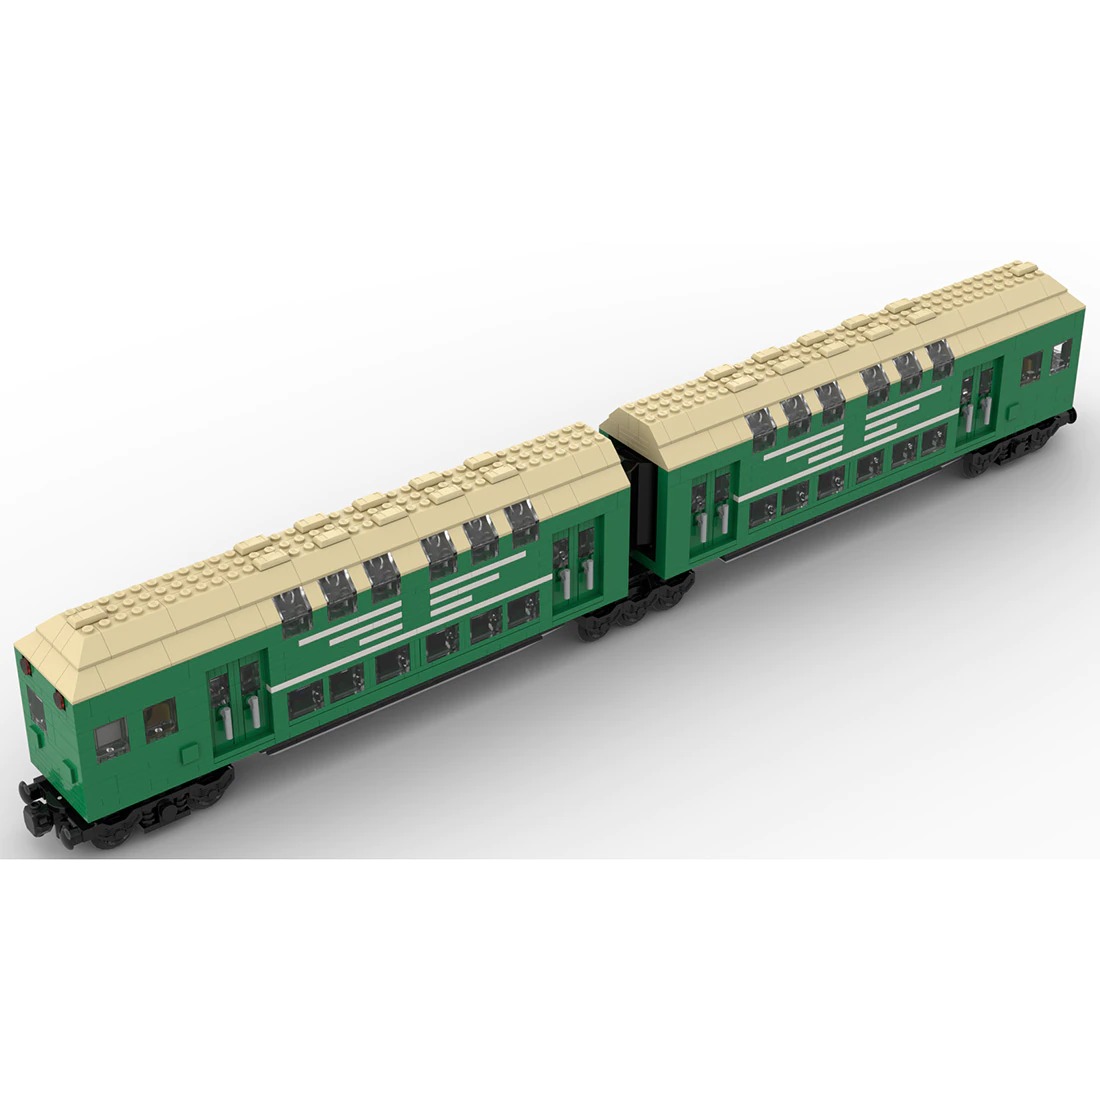 authorized moc 109281 7 axle train carri main 2 - KAZI Block